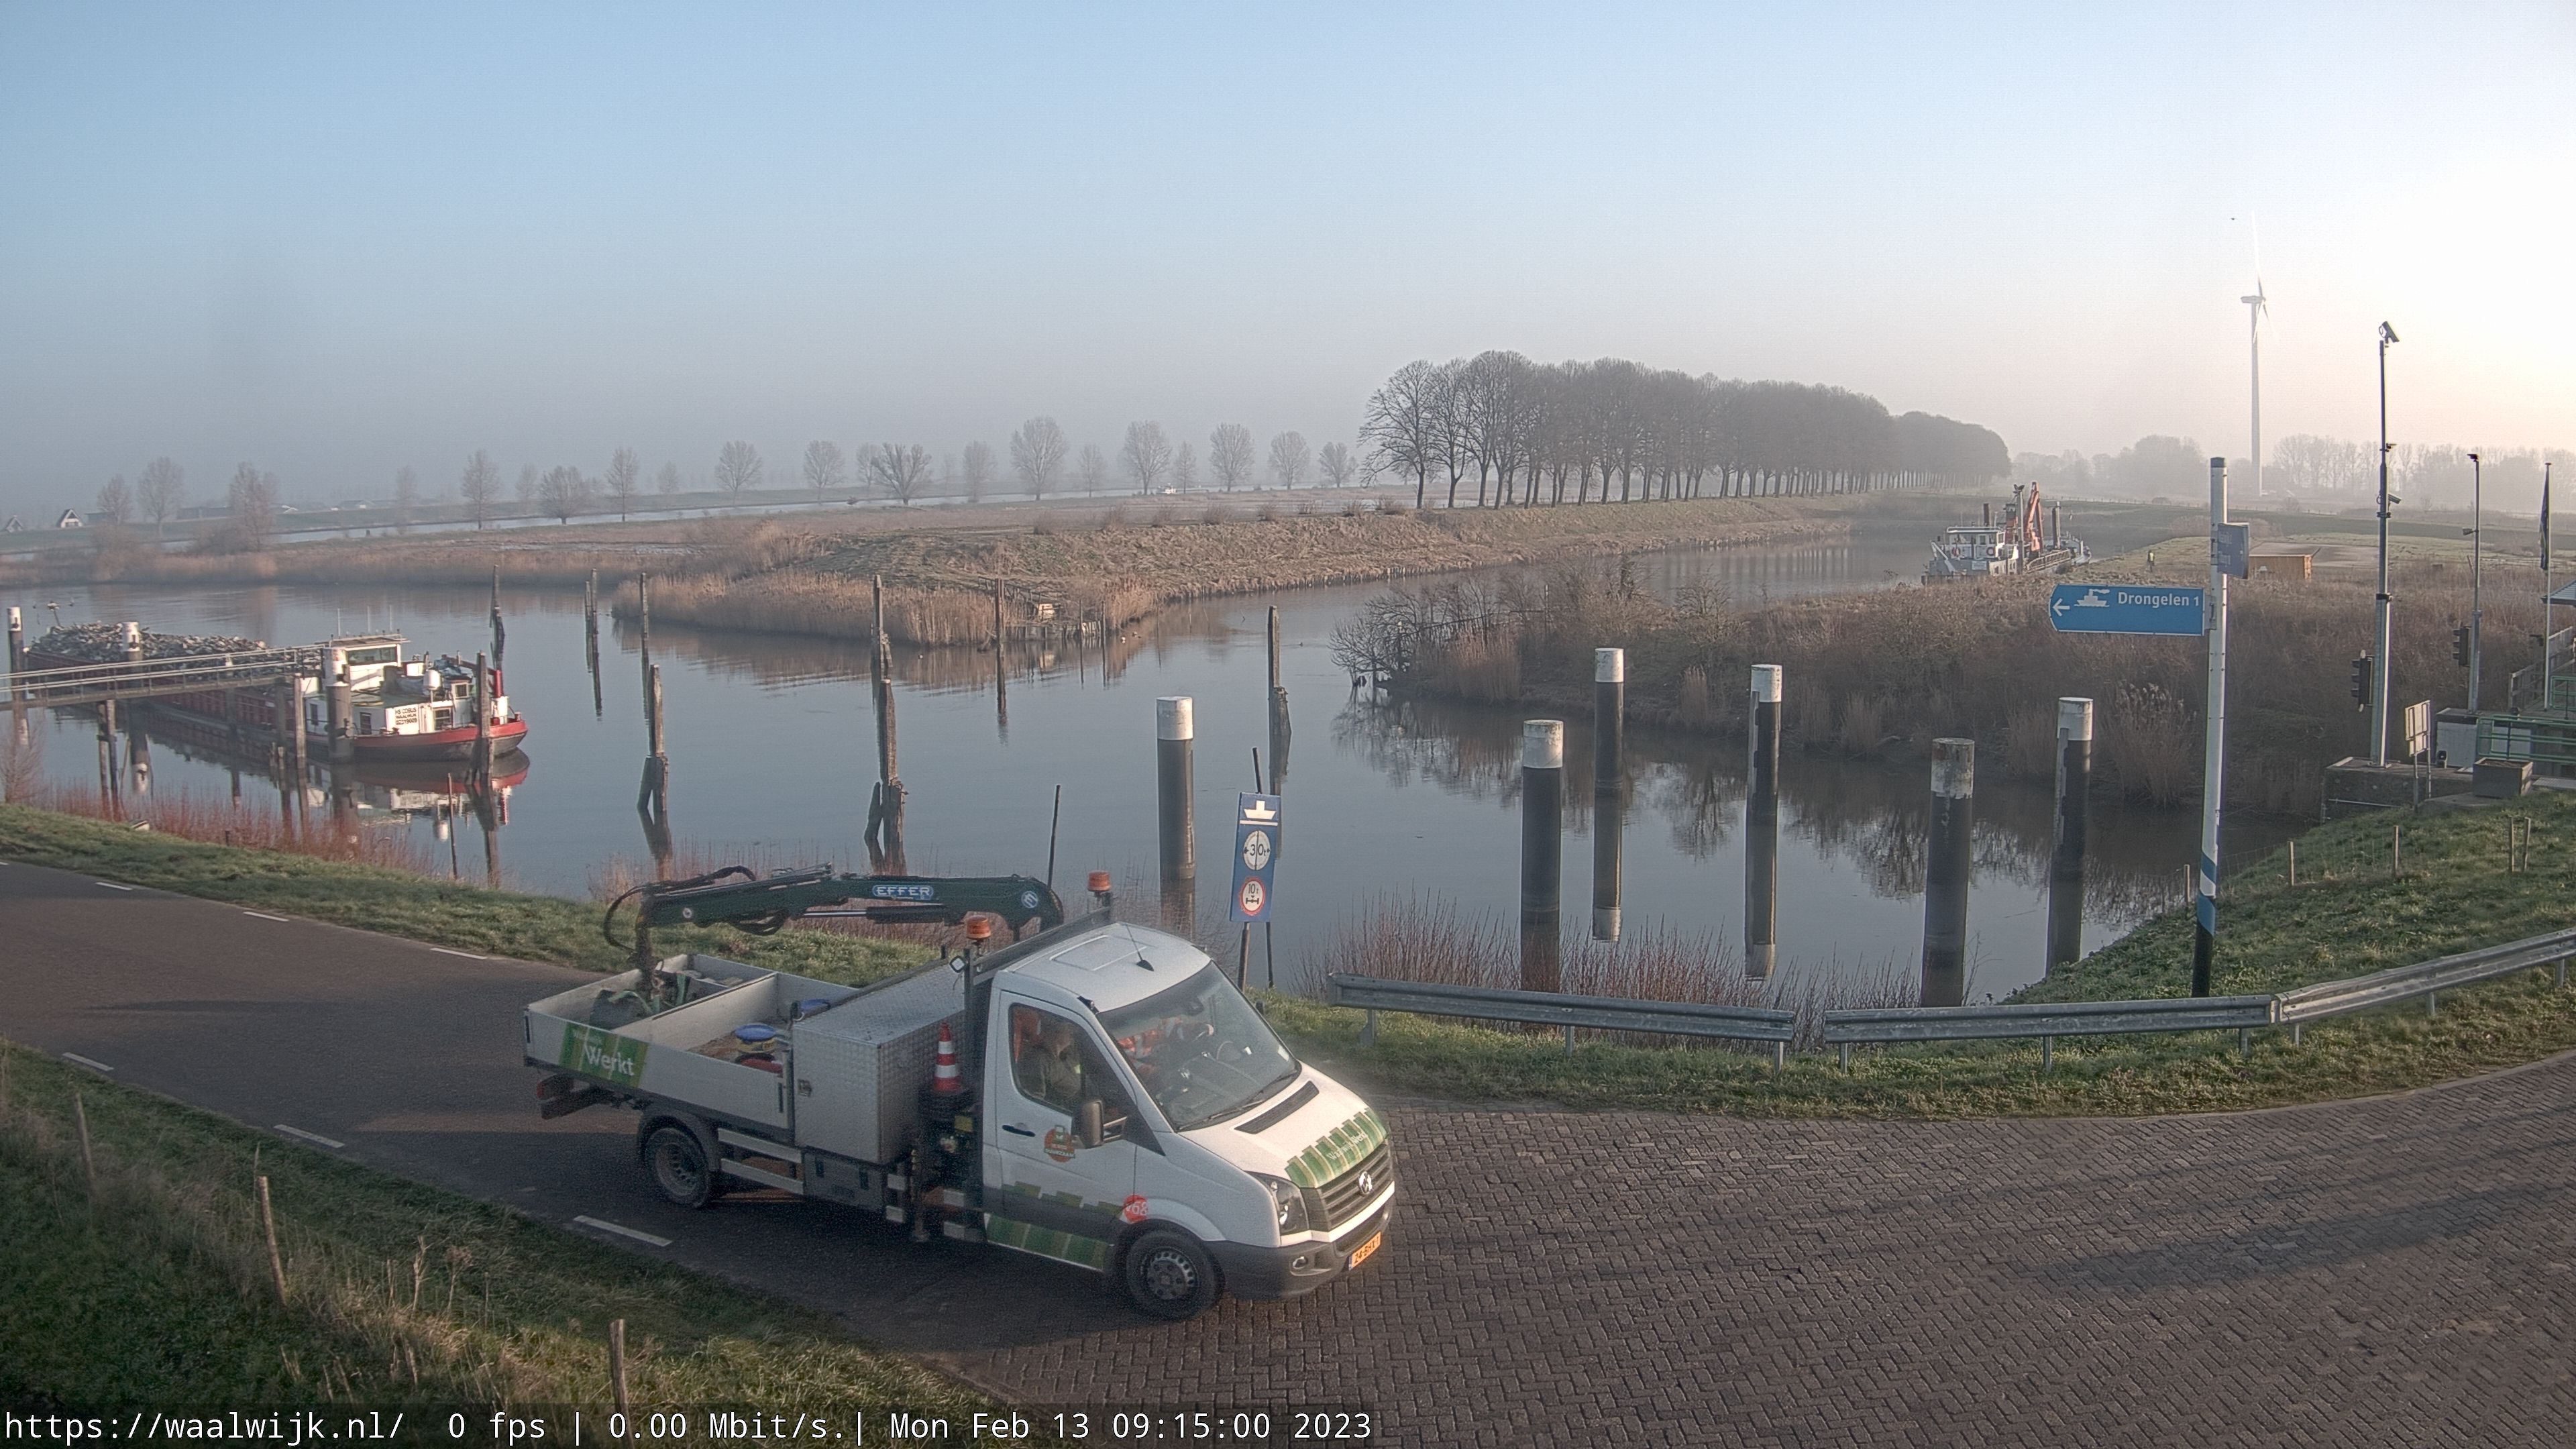 WebCam.NL | ultraHD 4K camera Waalwijk.